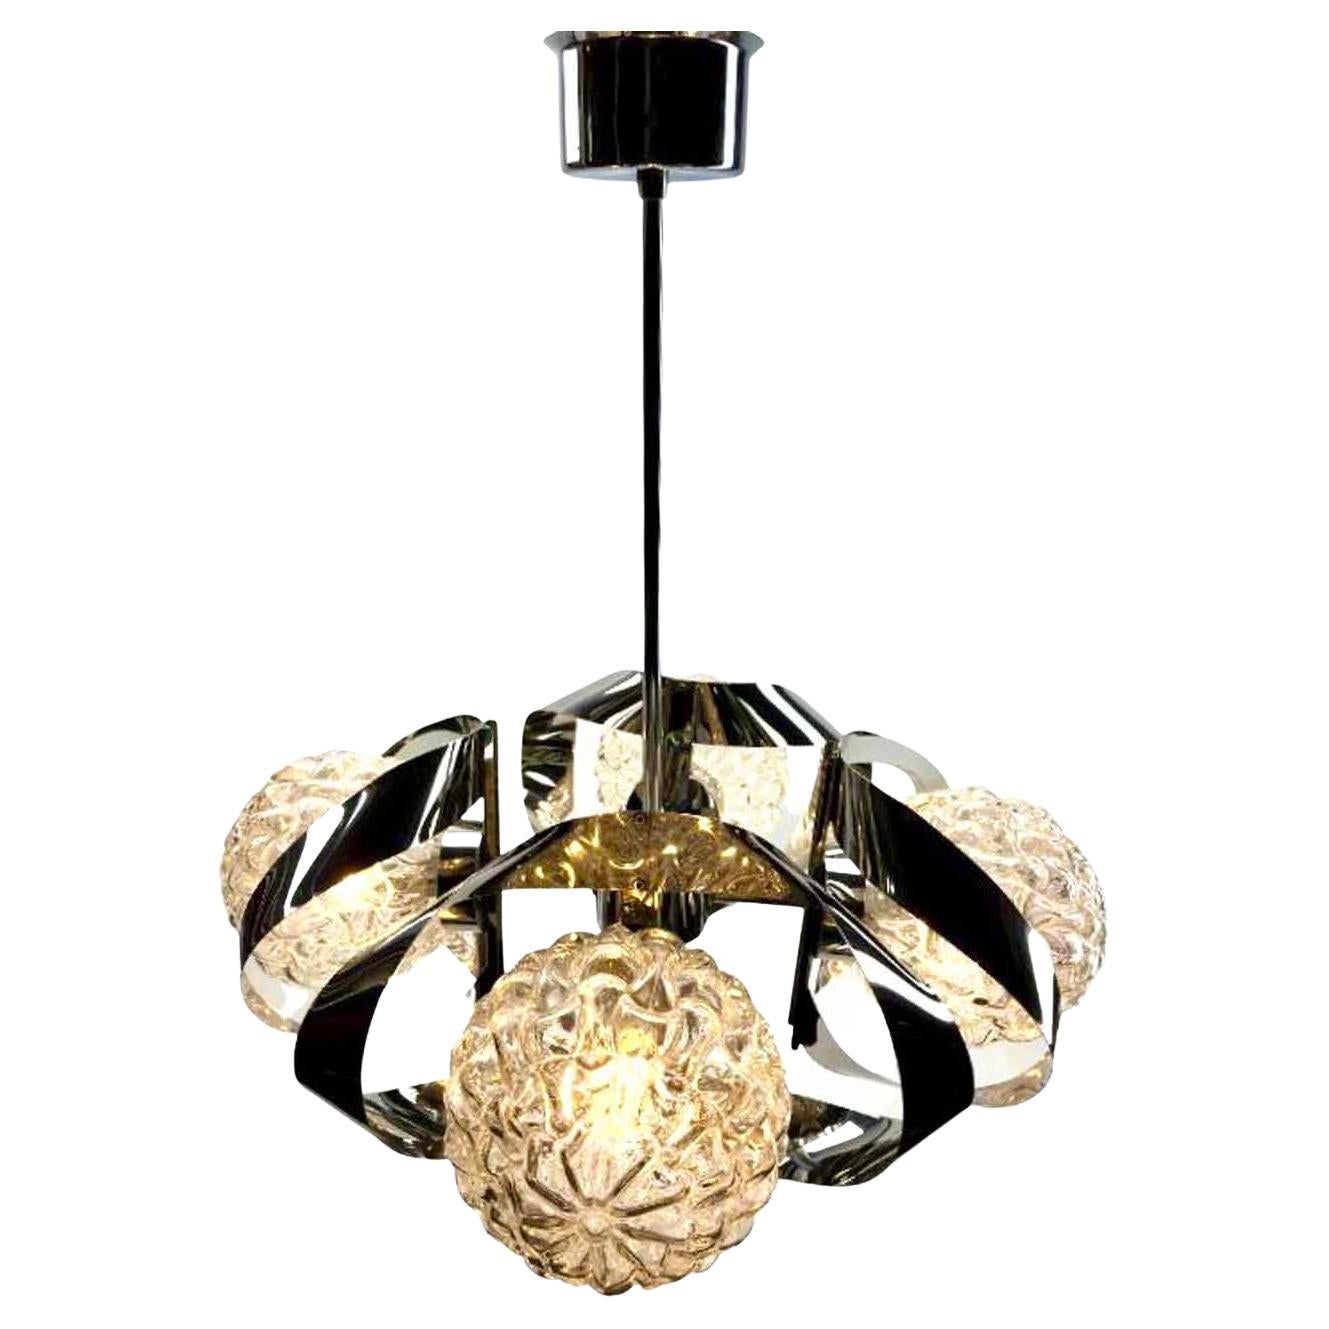  Swirl Ball Pendant Stem Lamp with 4 Globular Lights Massive Belgium 1960s For Sale